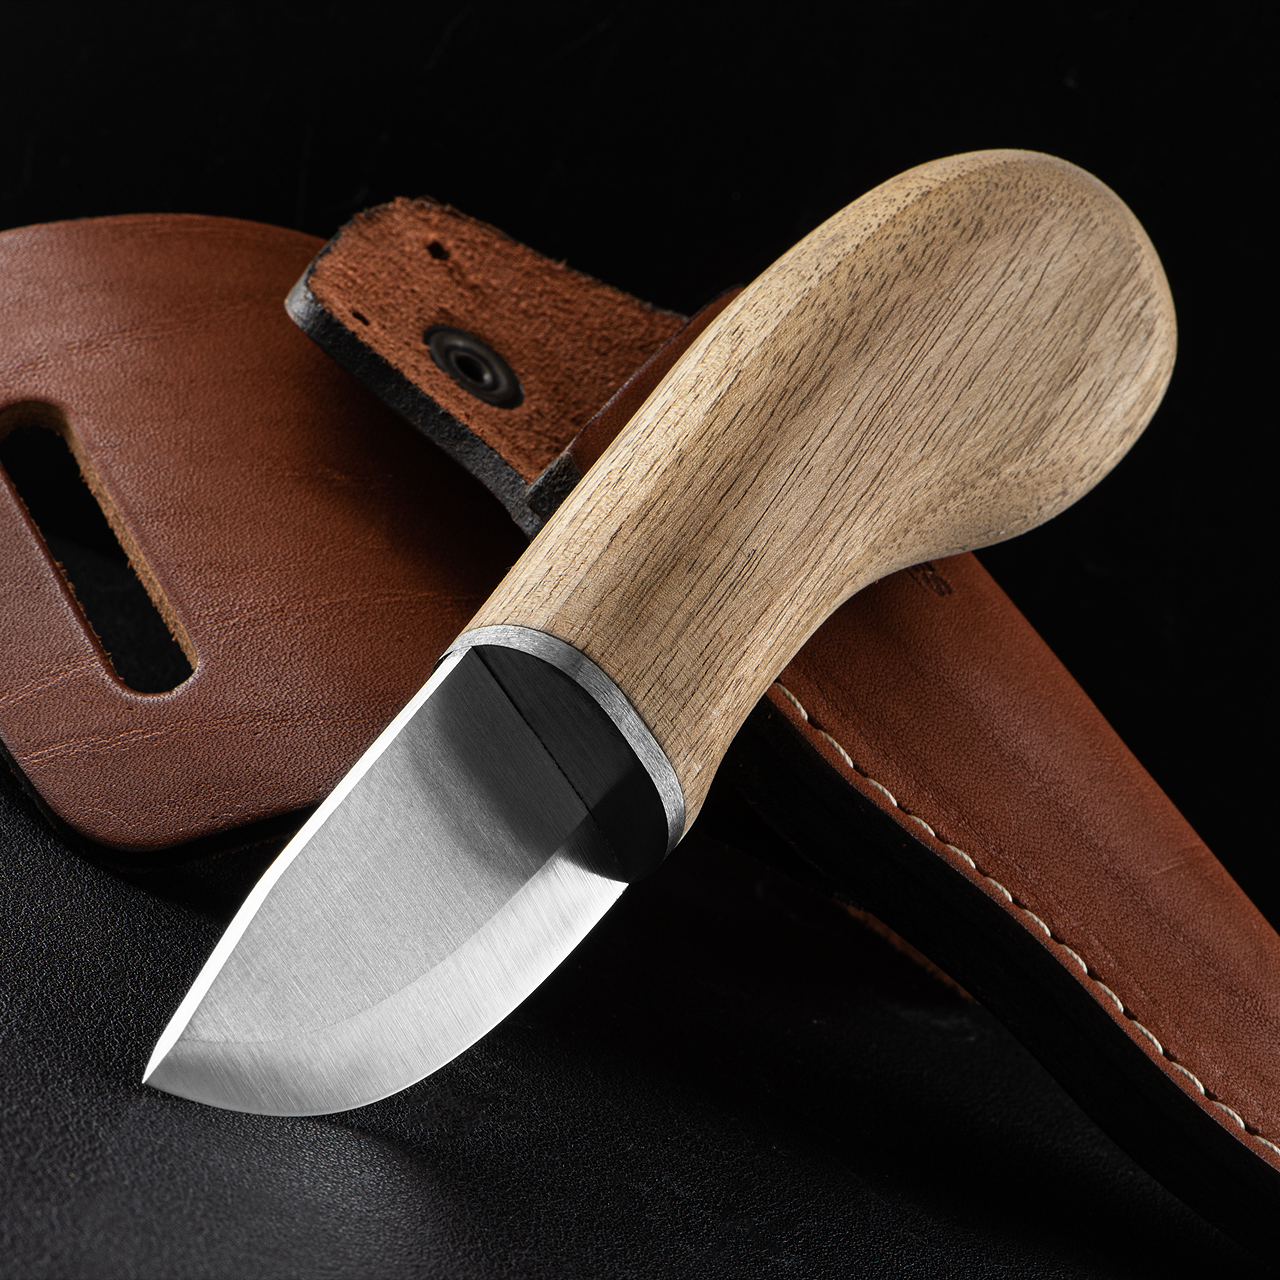 MK1 SSH Small EDC Knife — High quality handmade camping knives — BPS